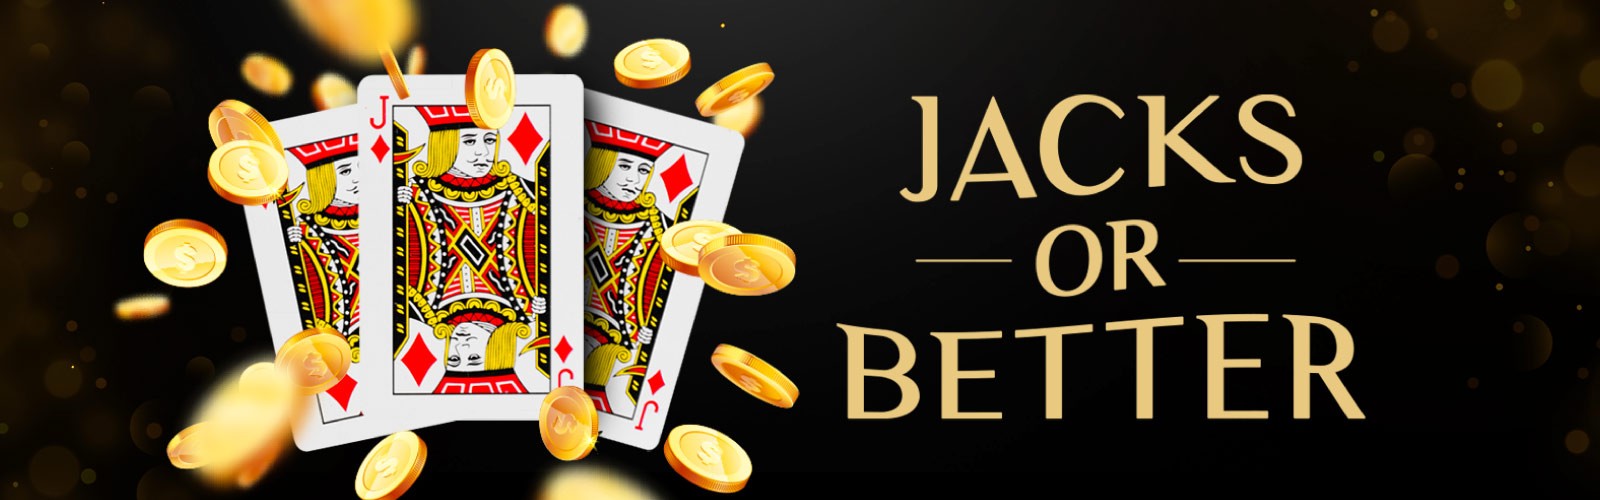 Jacks or Better vaizdo pokeris